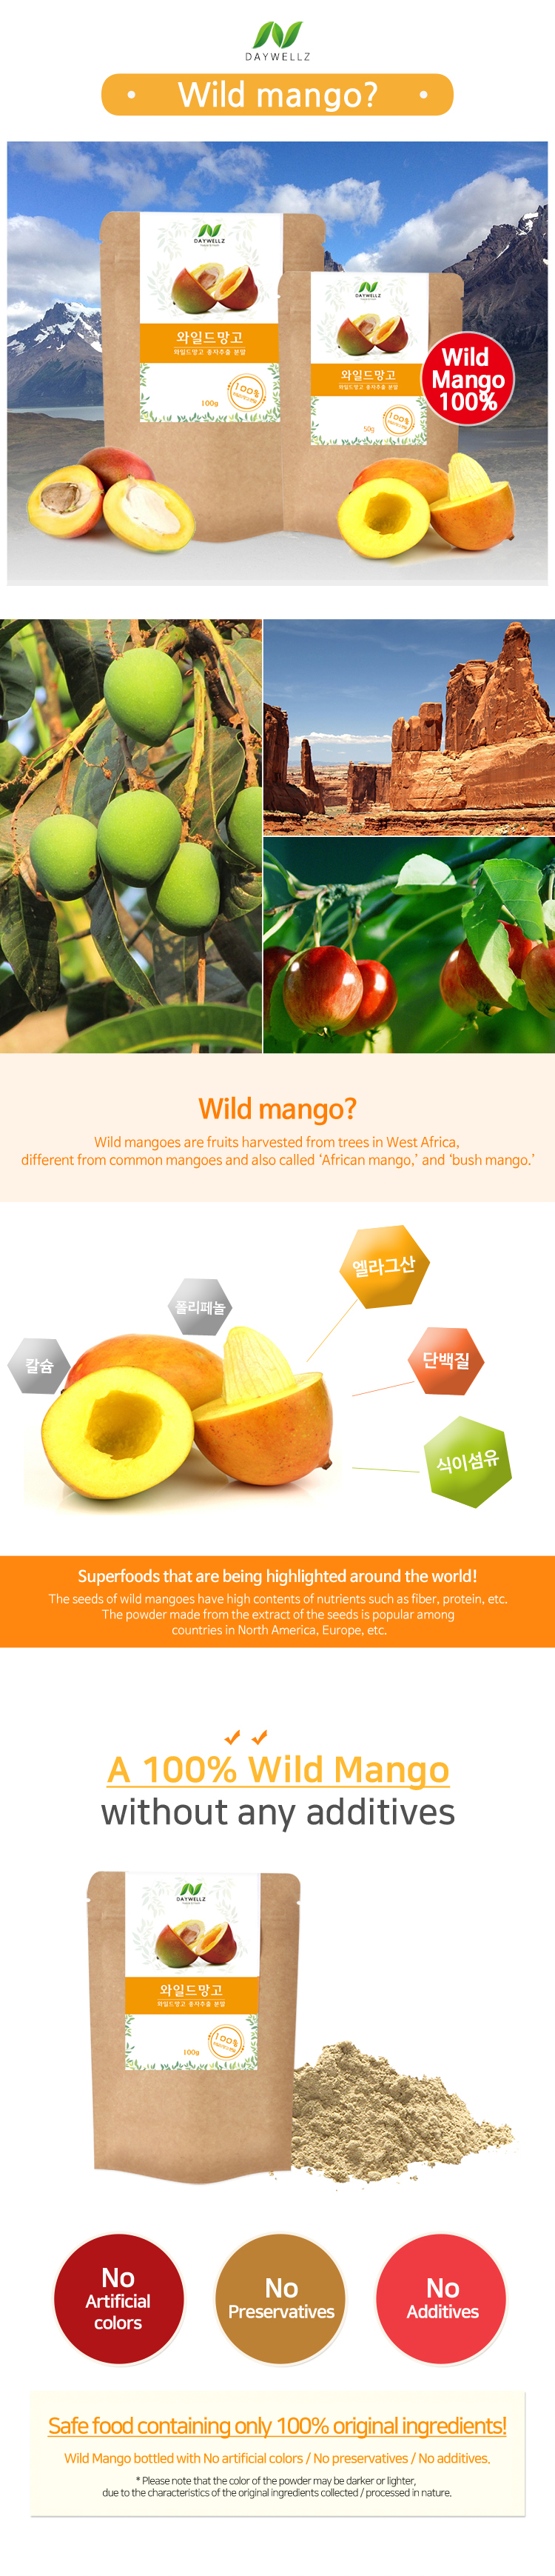 wild_mango.jpg